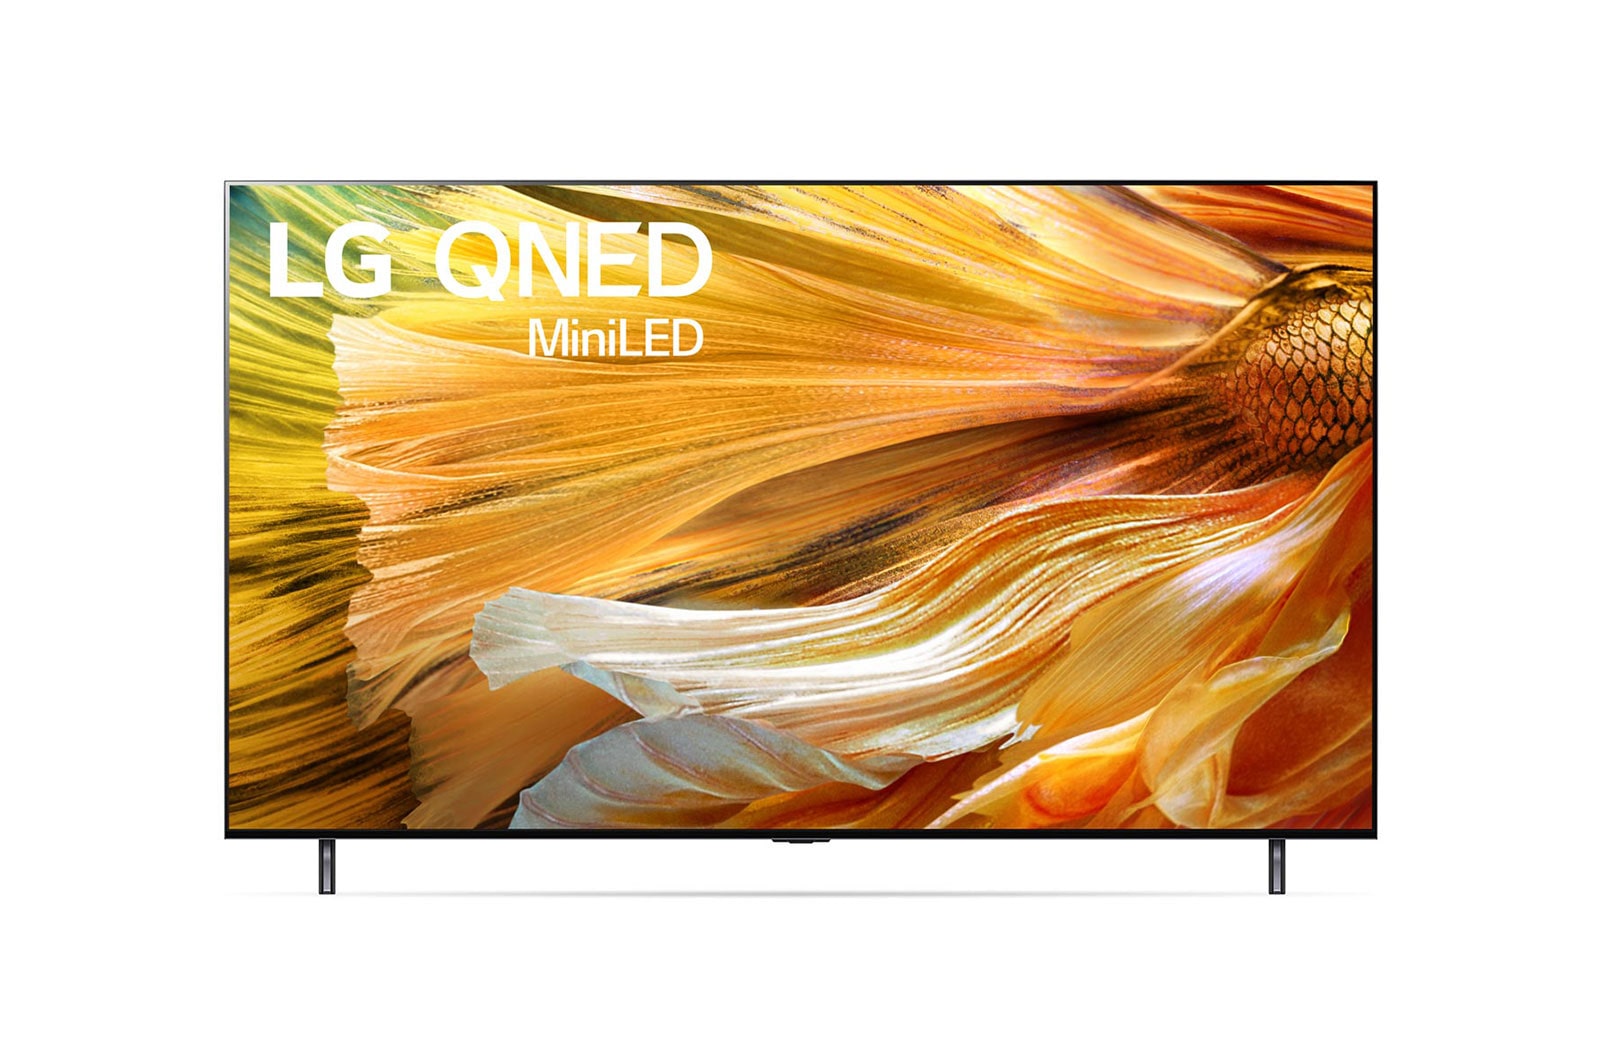 LG Televisor QNED Mini LED 75" 4K - Procesador Alpha 7 Gen 4 - Cinema HDR, Sonido Dolby Atmos - Inteligencia Artificial, 75QNED90SPA